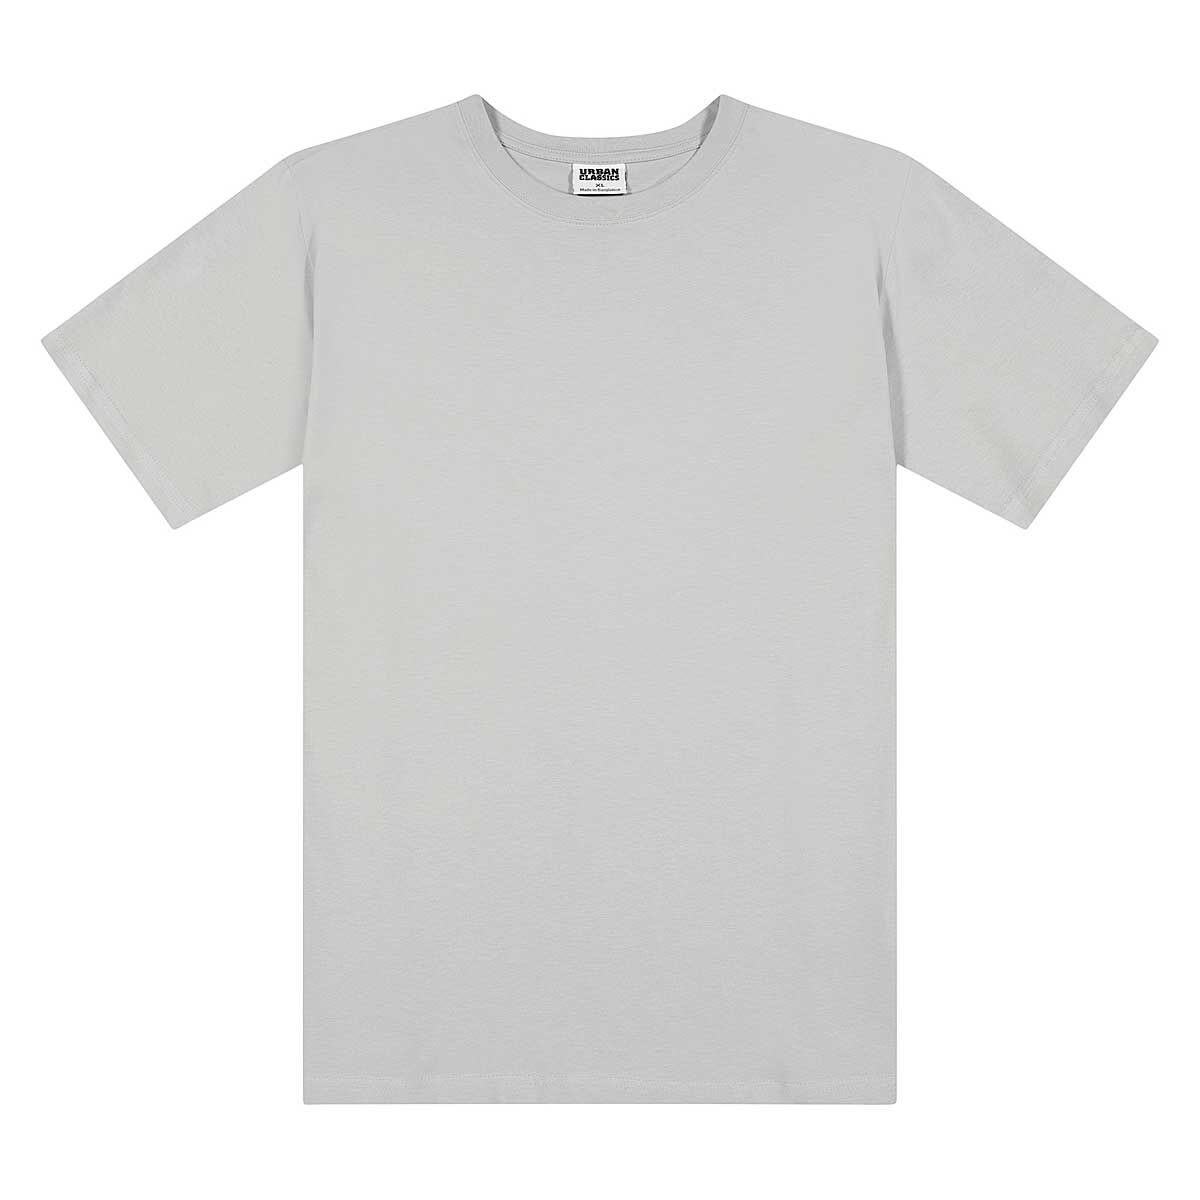 Vêtements Hommes | Tall T-Shirt - VL75591